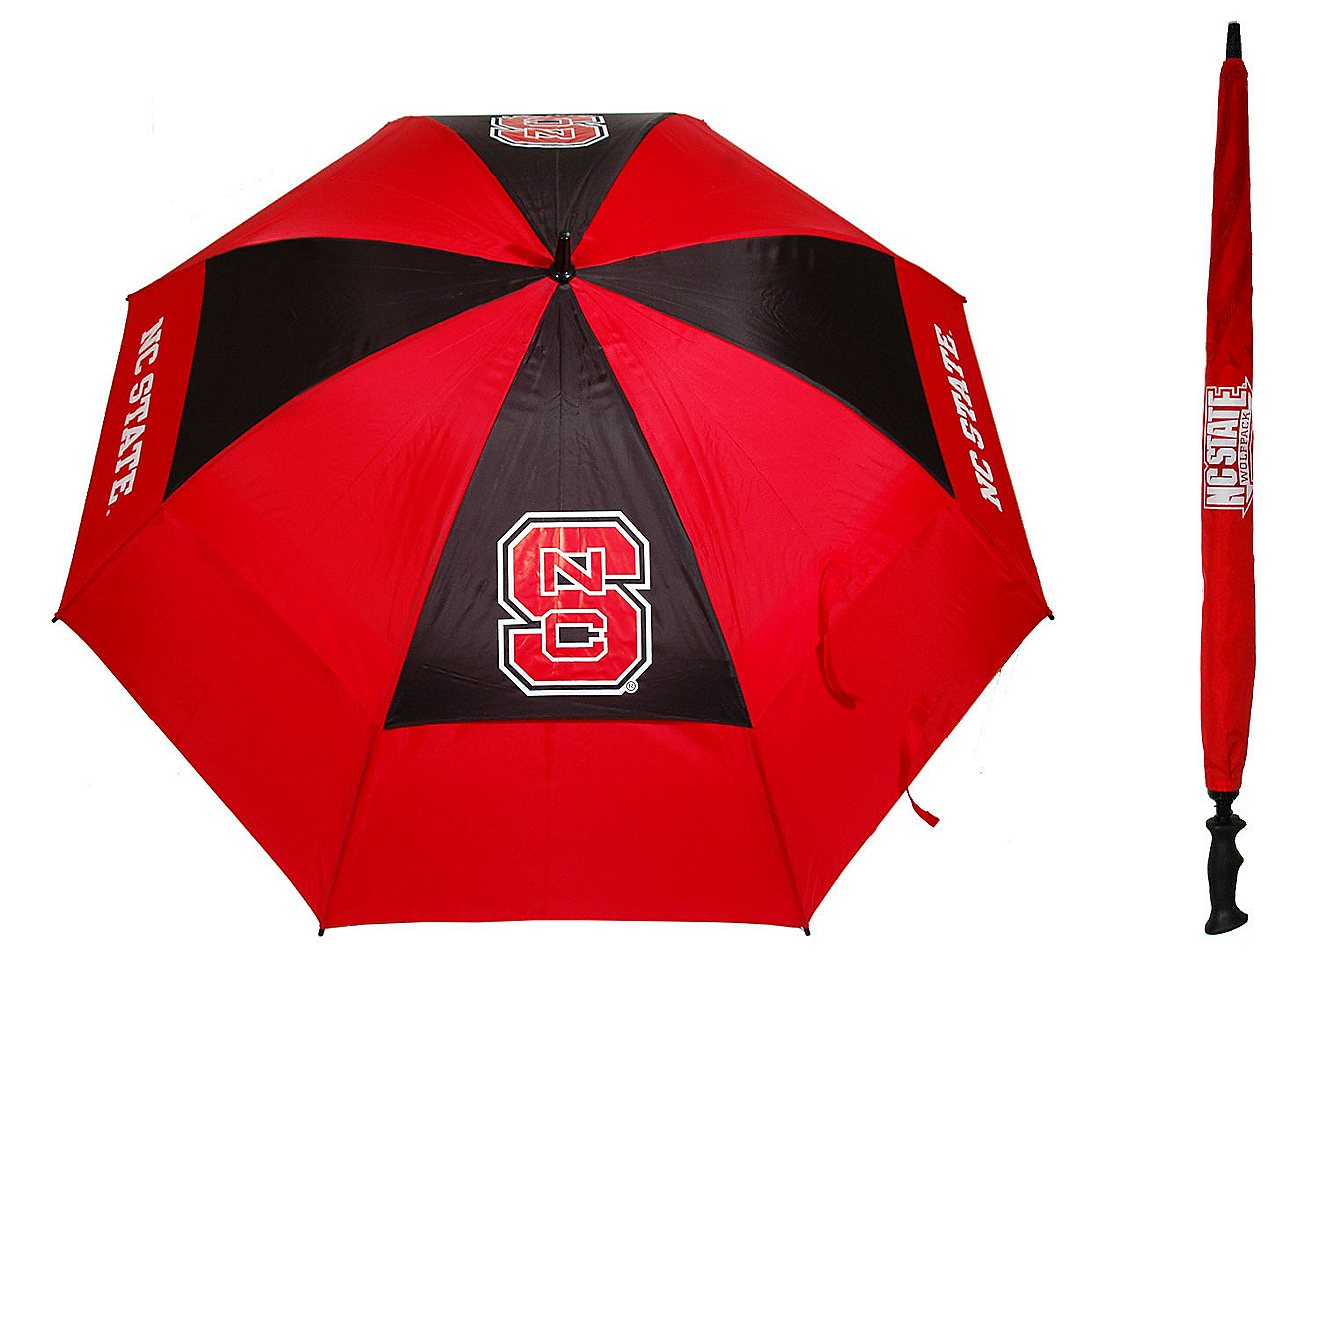 Team Golf Adults' North Carolina State University Umbrella                                                                       - view number 1